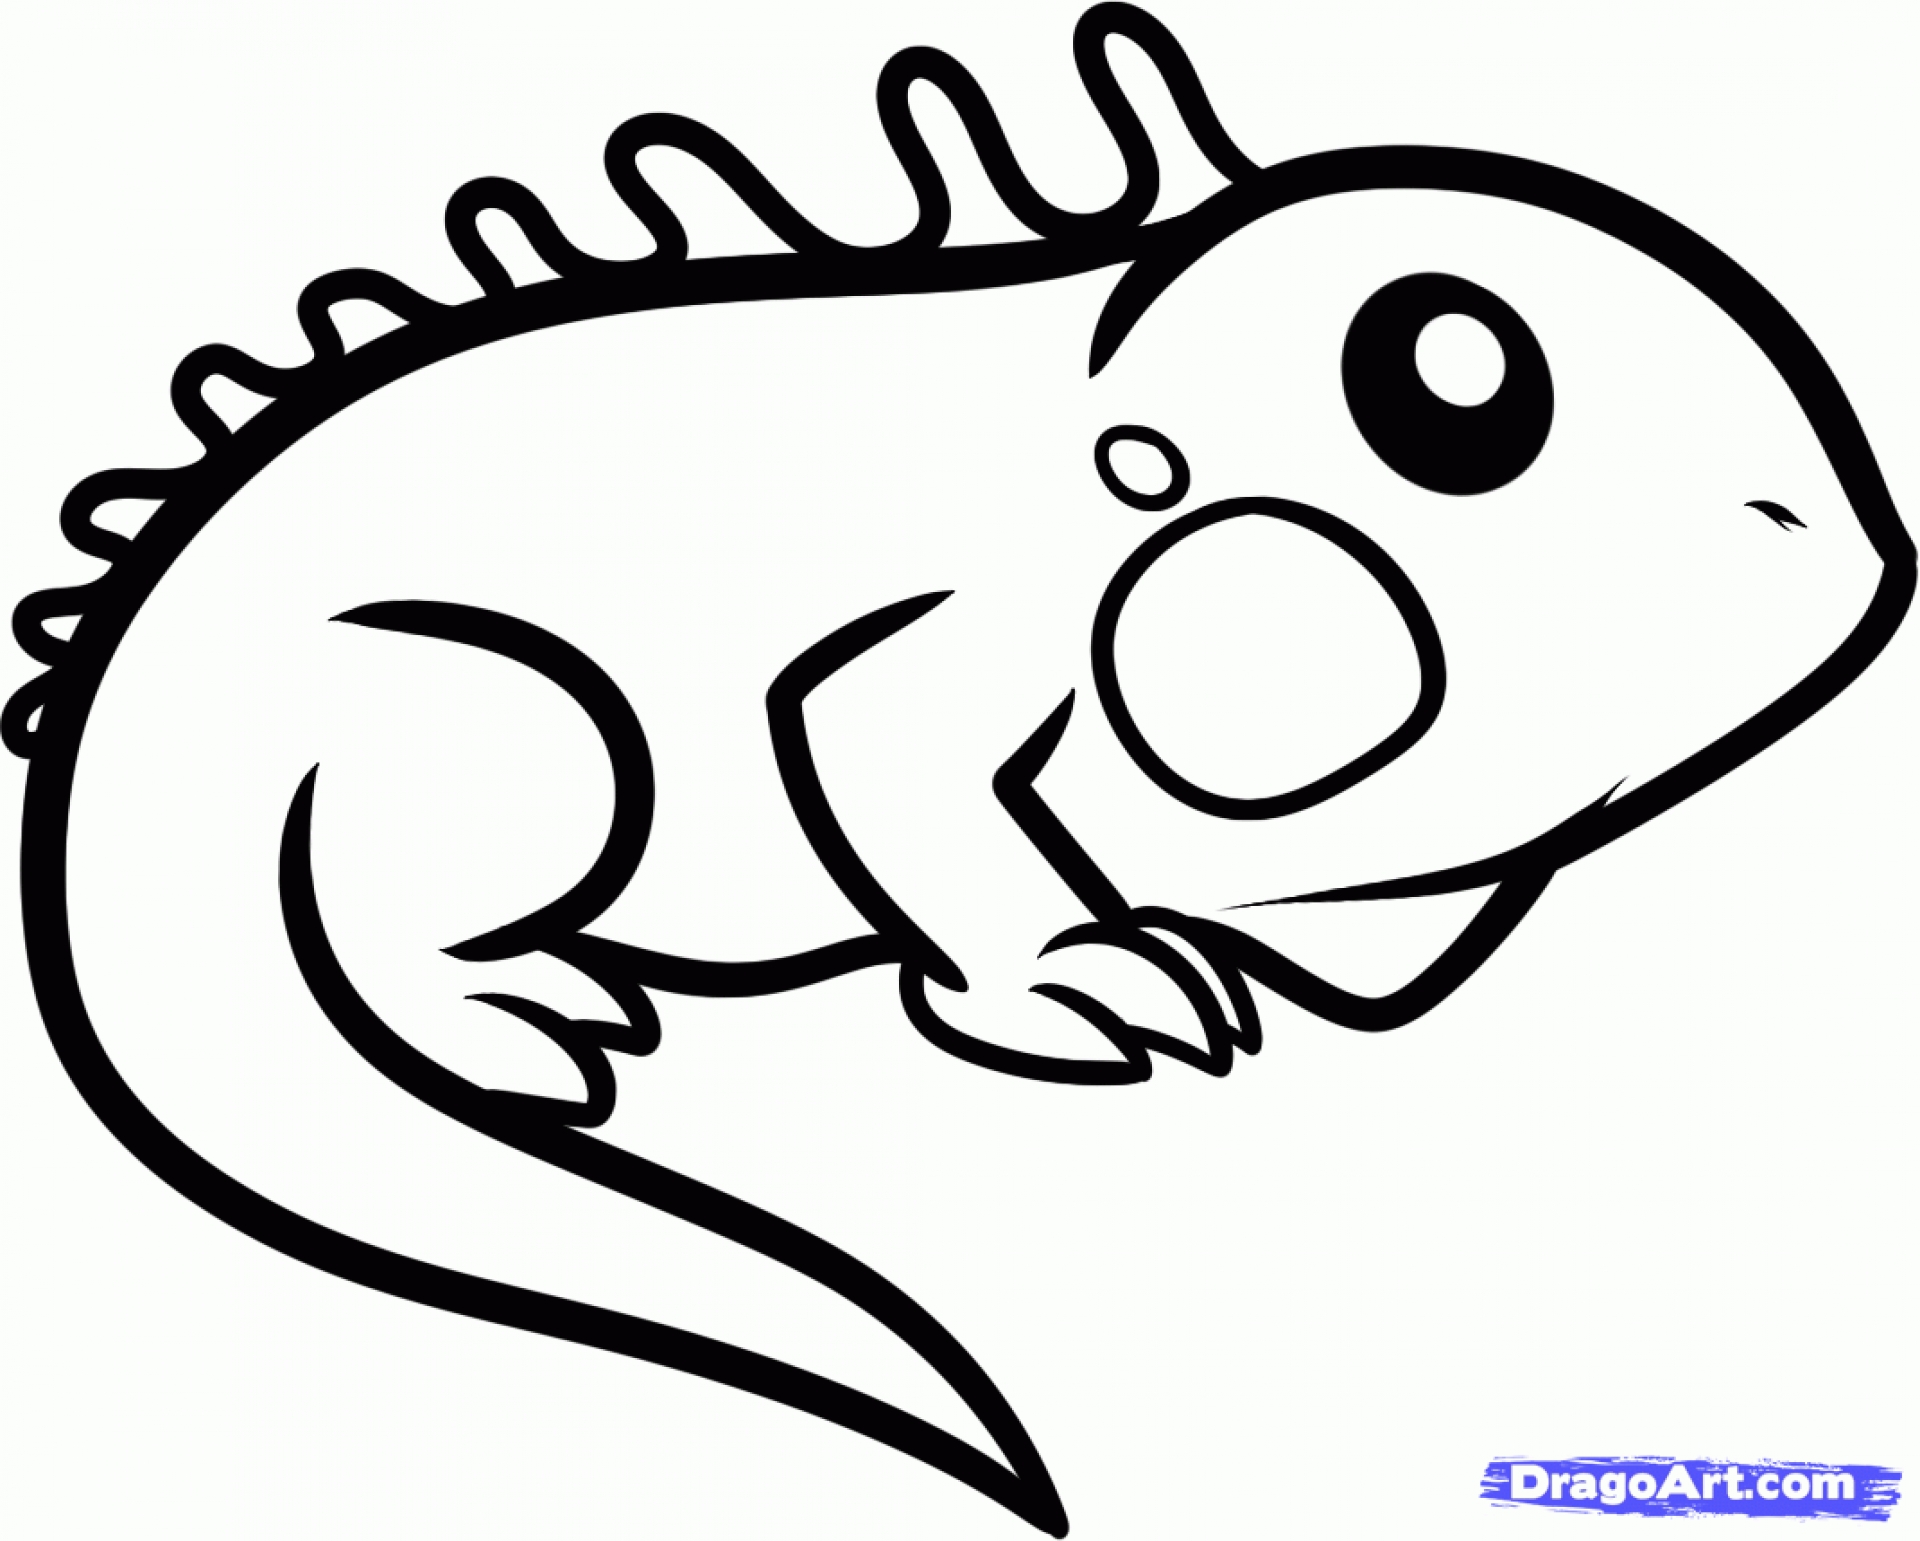 Cute Chibi Animals 3 | Baby animal drawings, Easy animal drawings, Animal  sketches easy